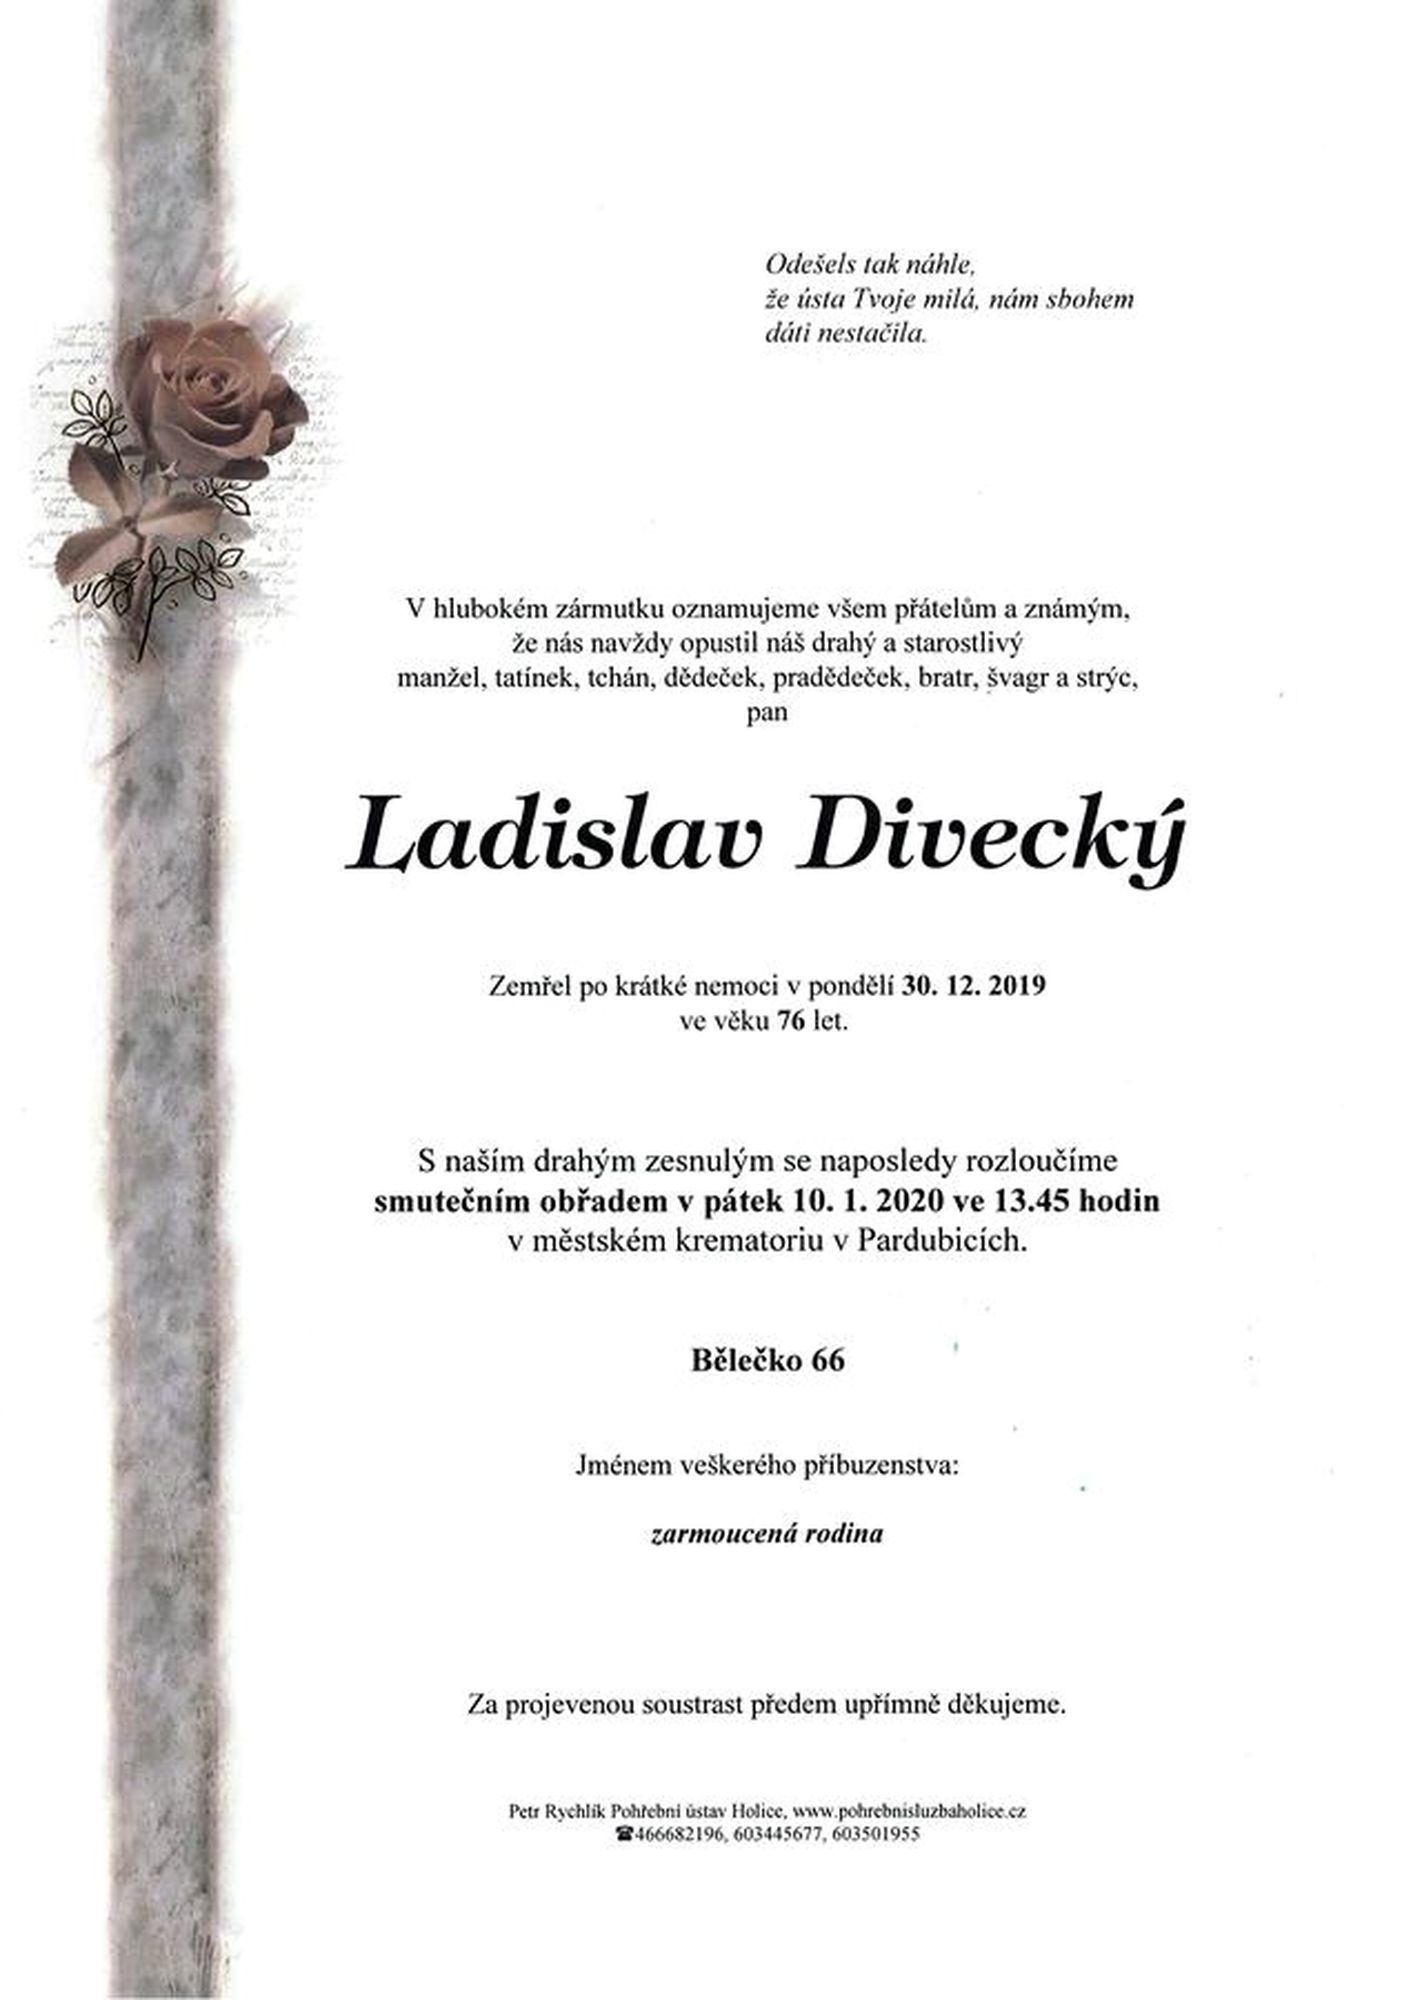 Ladislav Divecký